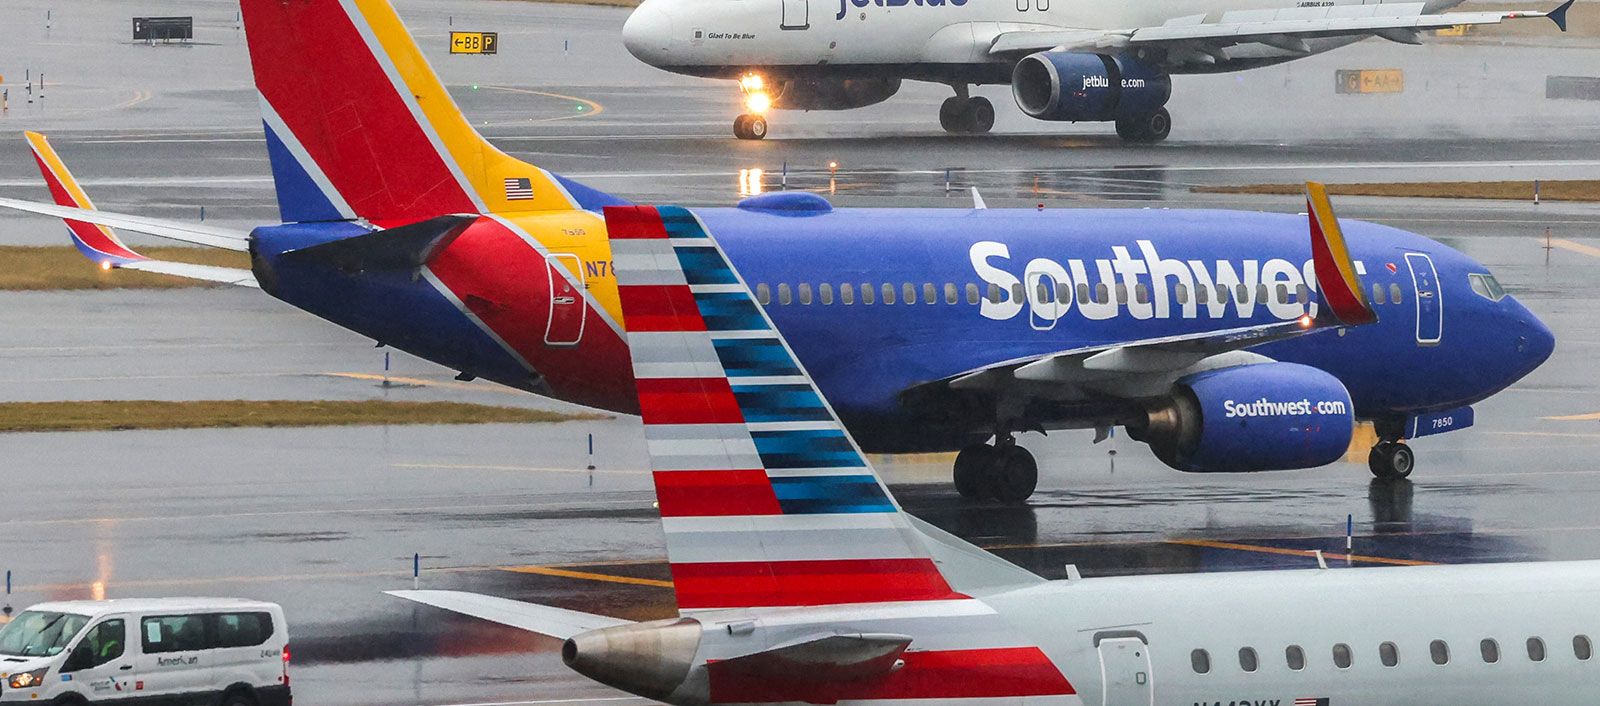 Passenger, flight attendant injured during severe turbulence on Florida-bound Southwest flight